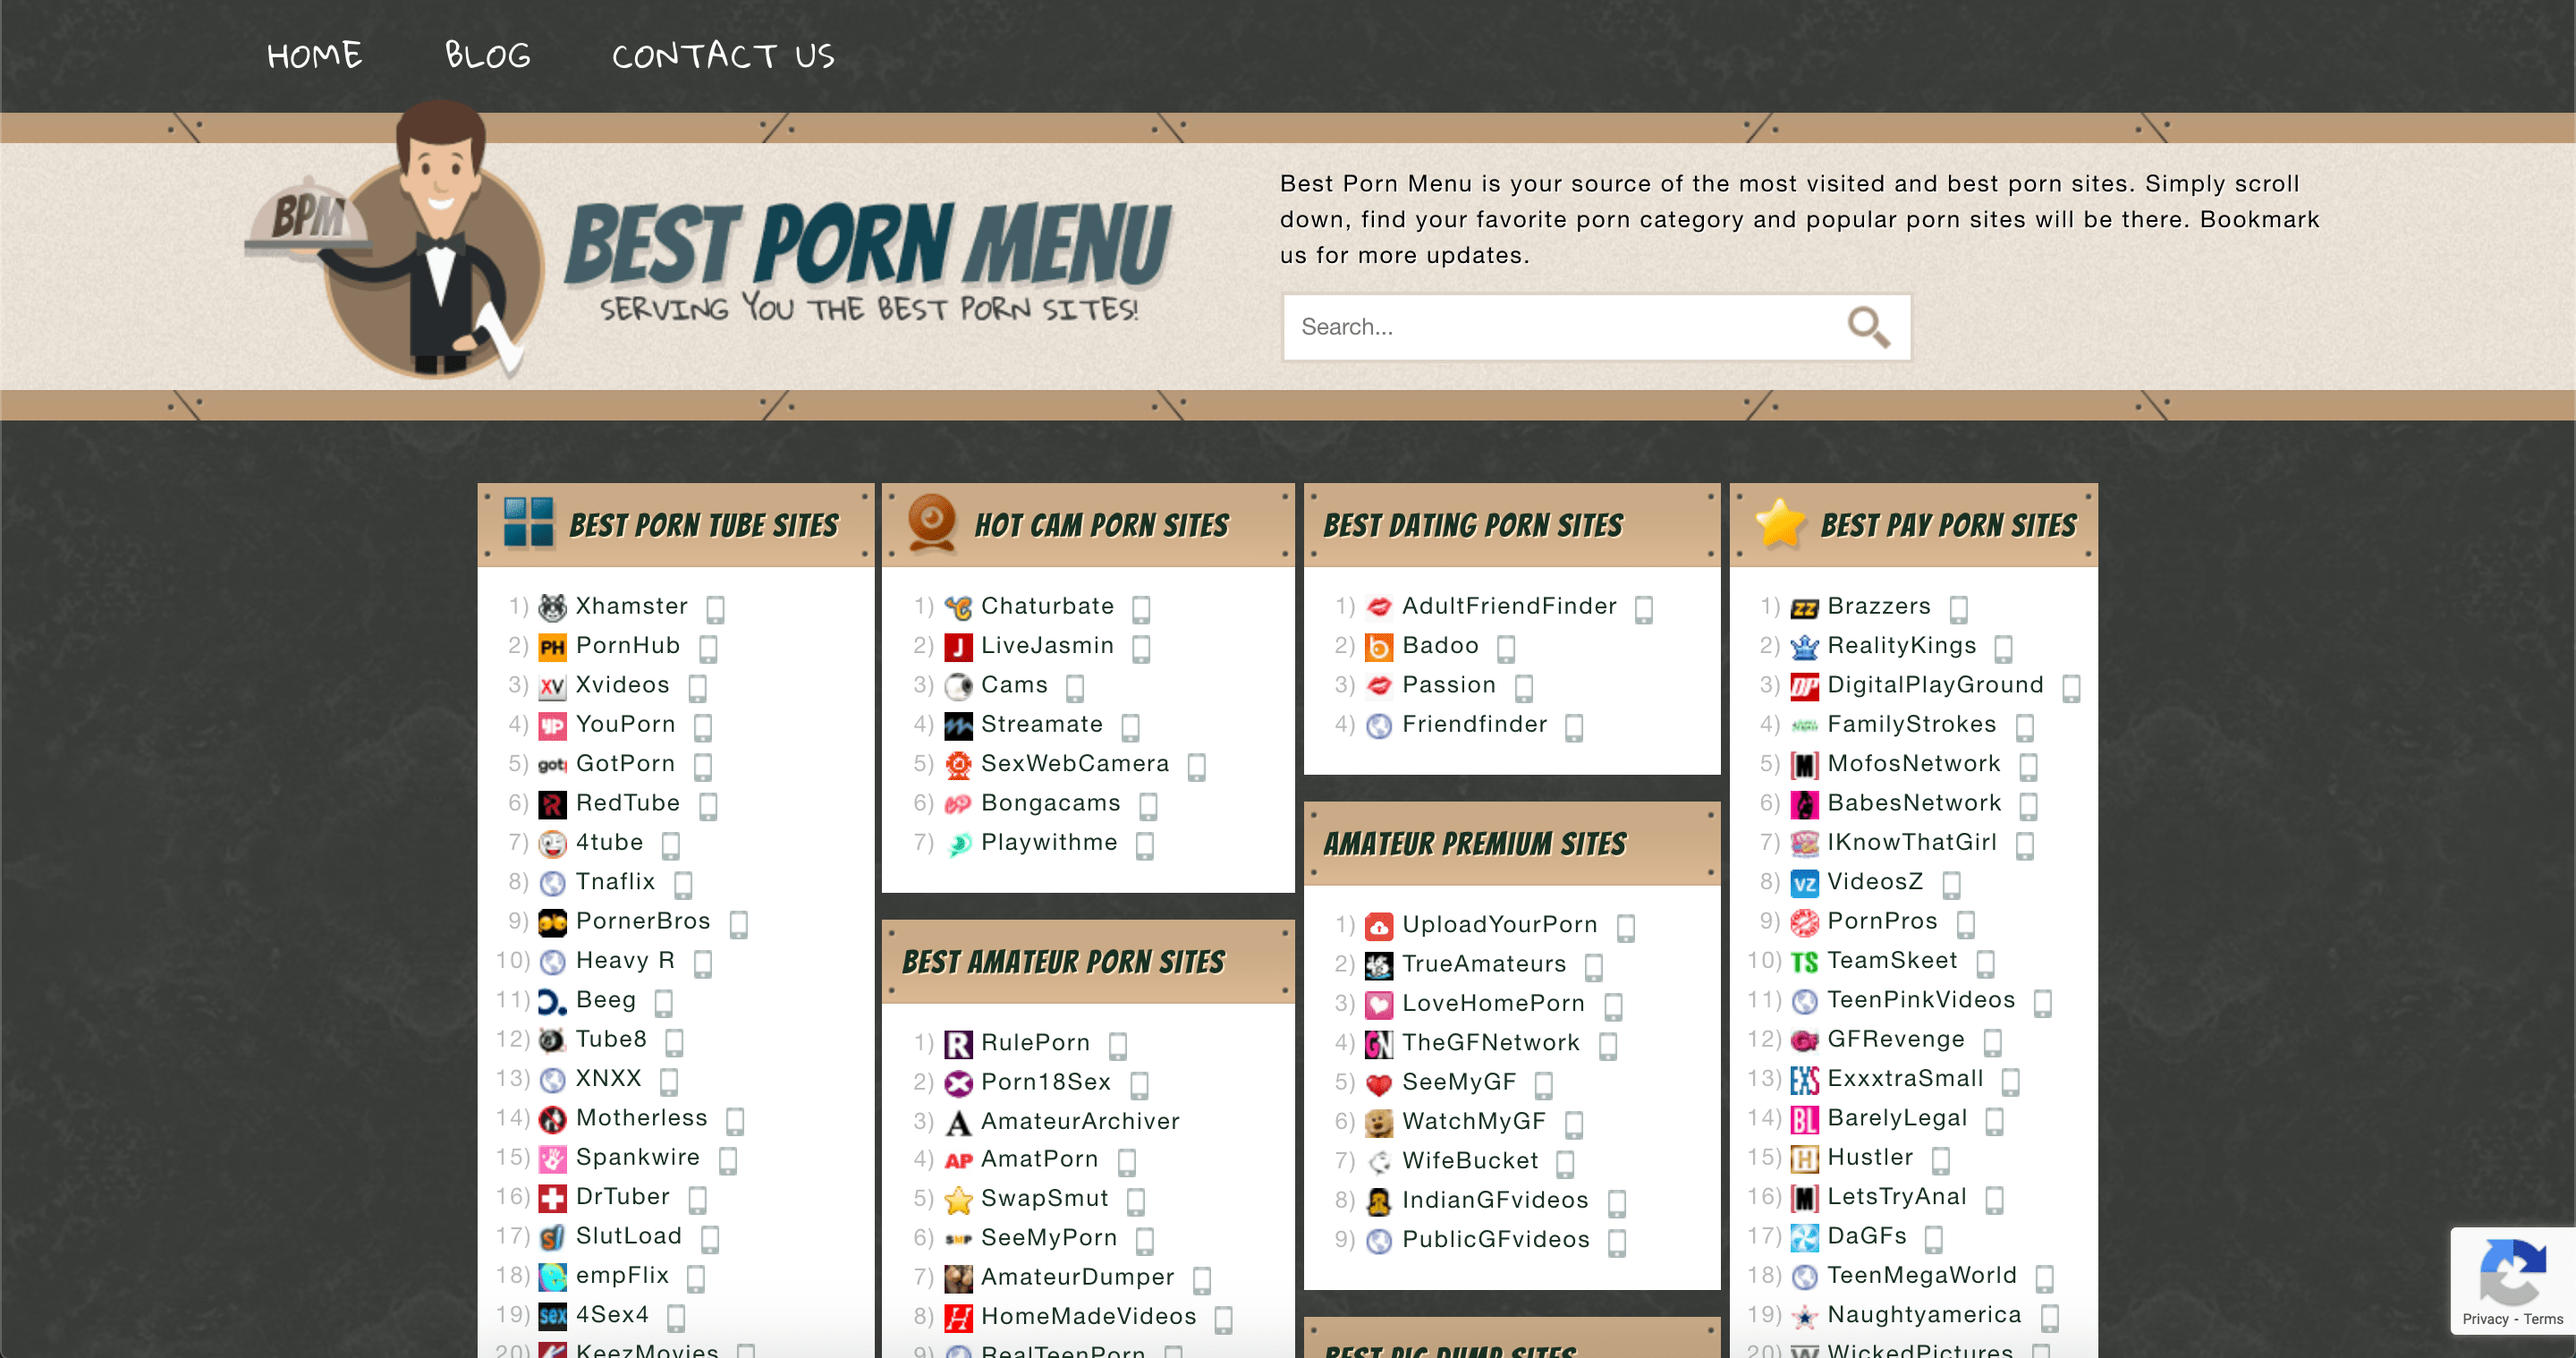 Best Porn Menu, Serving The Best Porn Sites